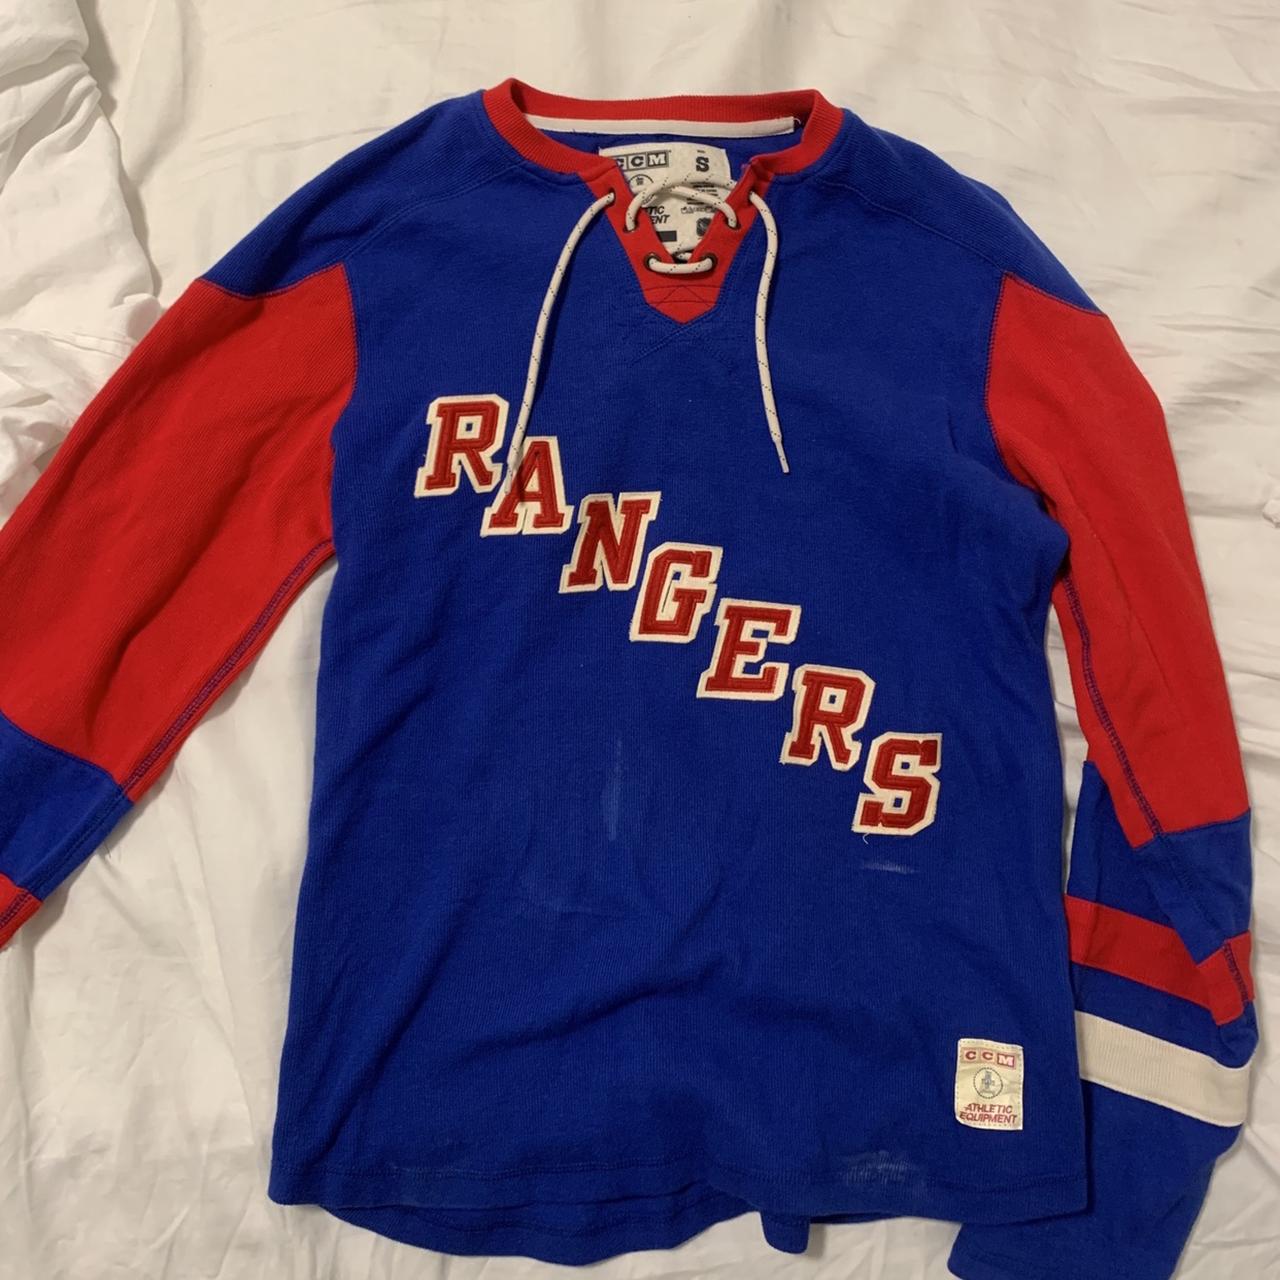 1999-2001 Glasgow Rangers home jersey Vintage - Depop